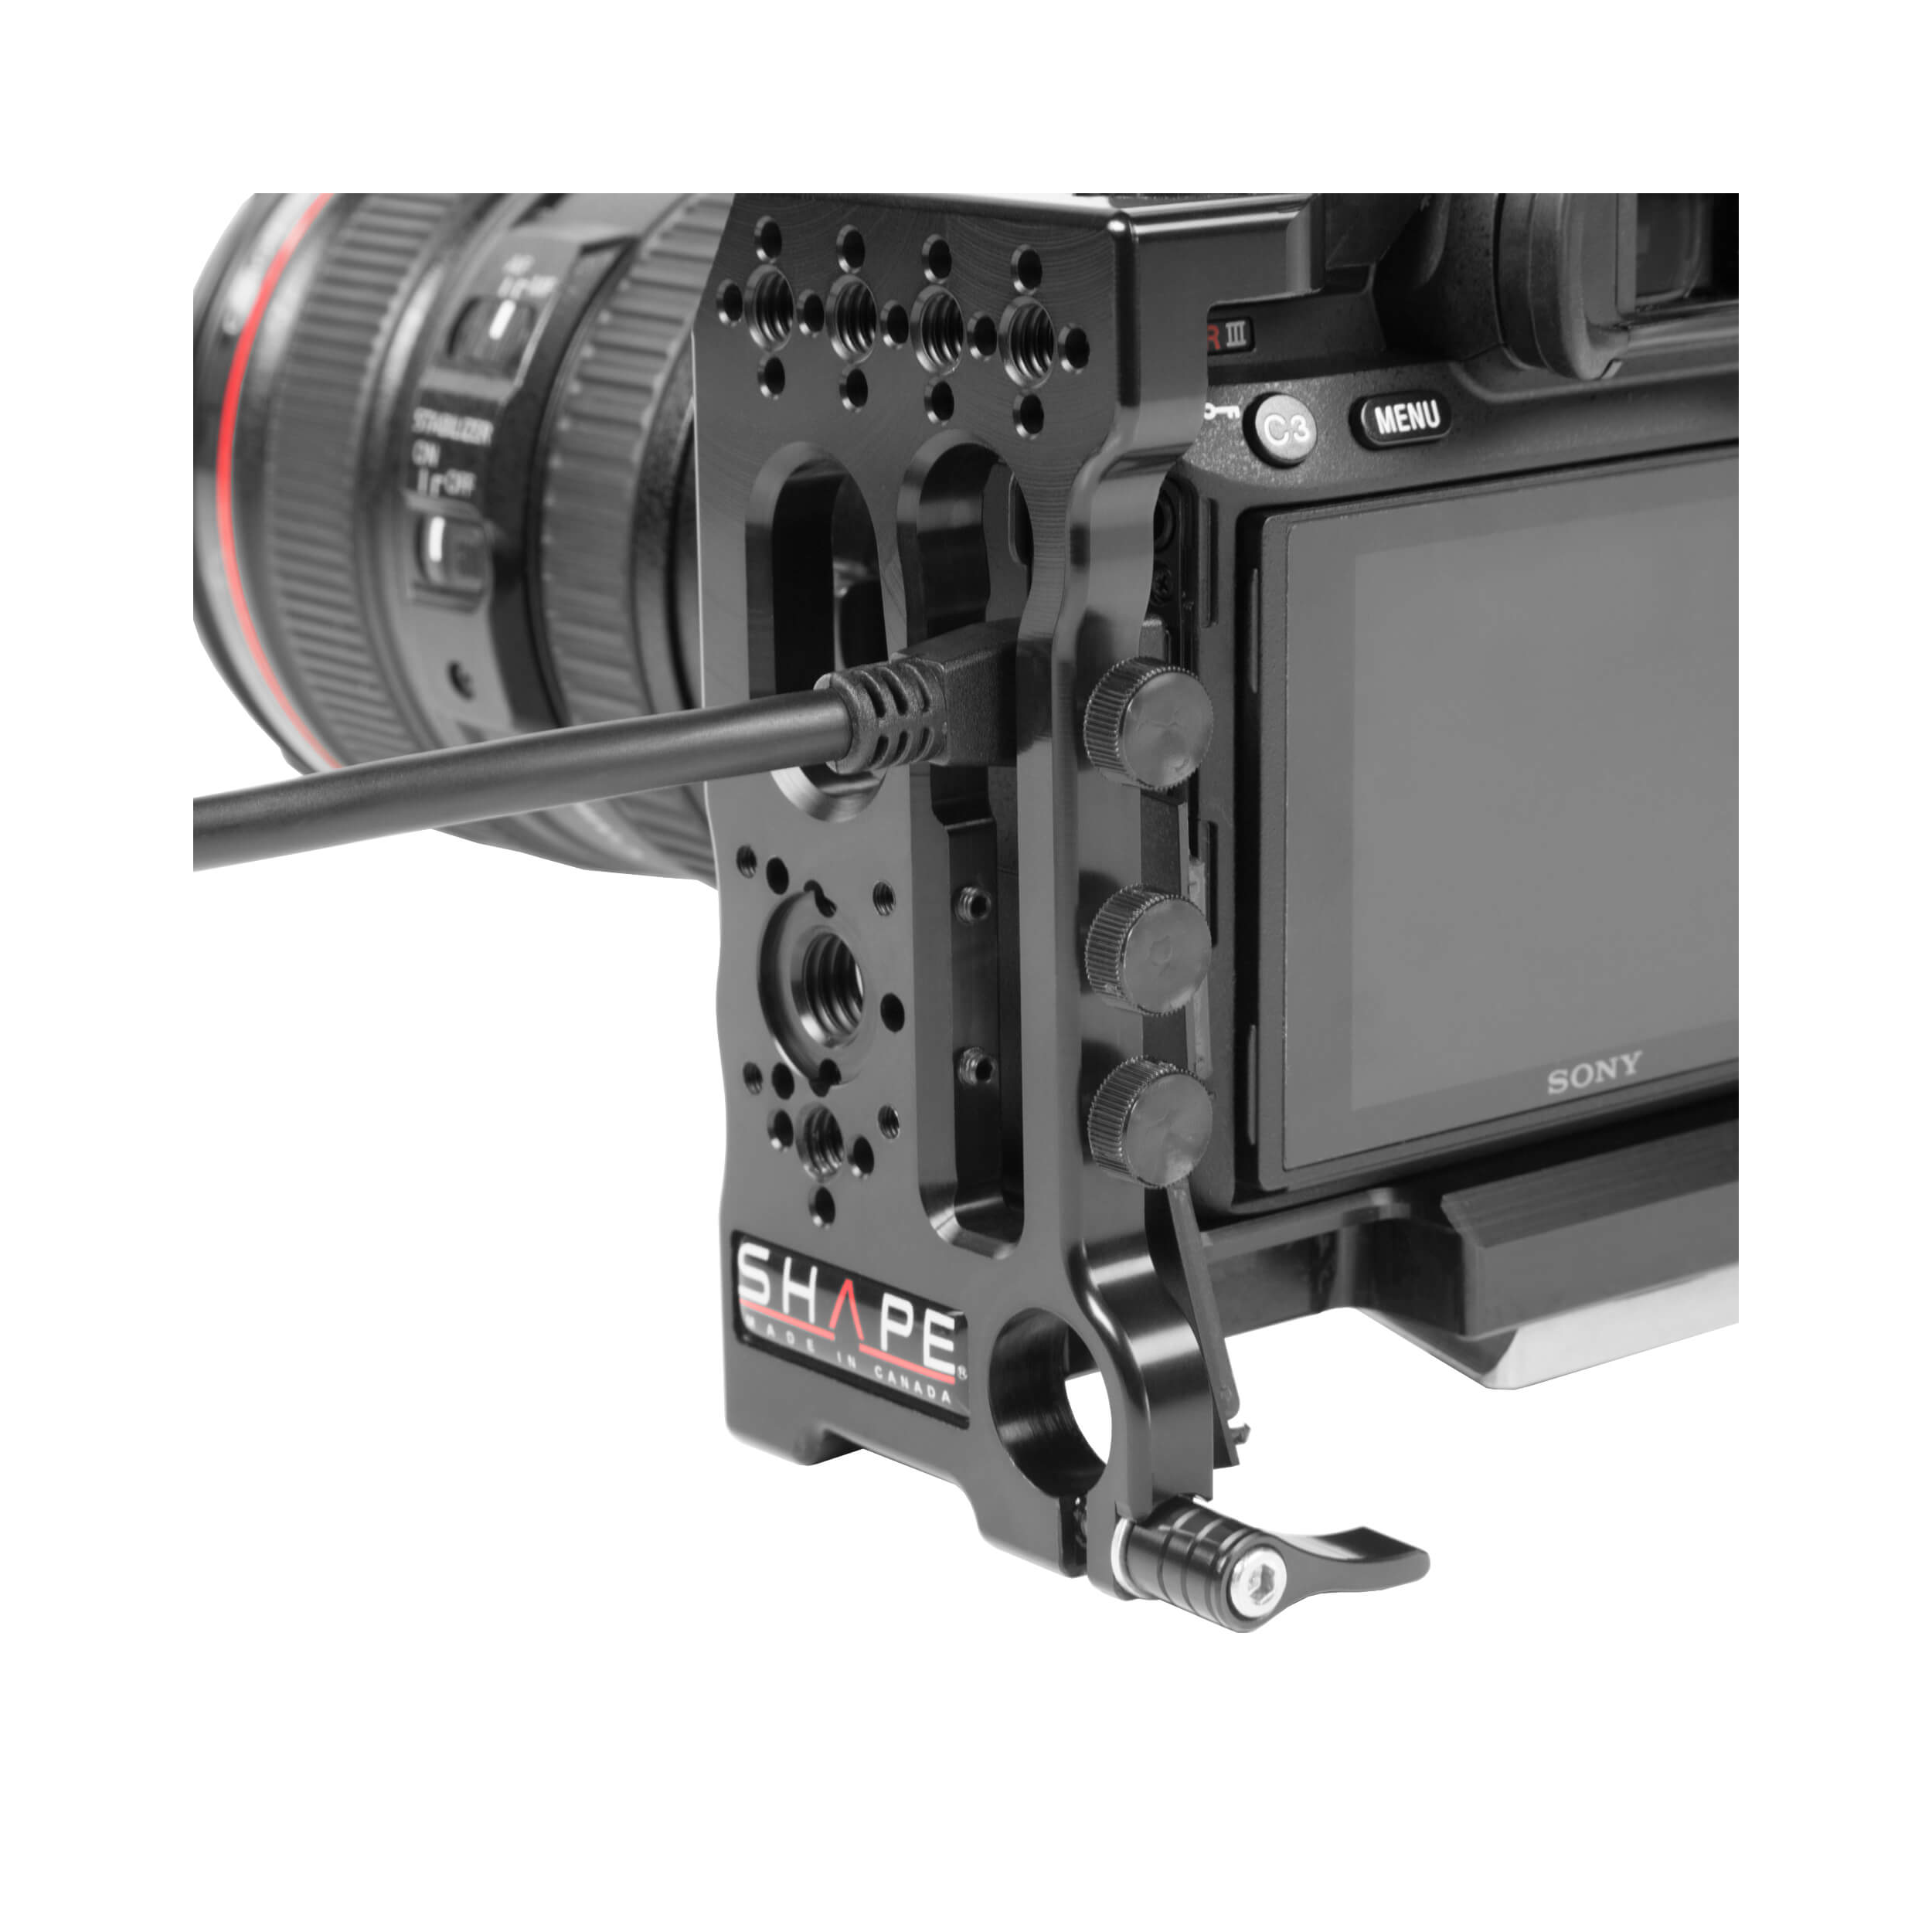 SHAPE 15mm Rod System for Sony a7R III/a7 III Camera